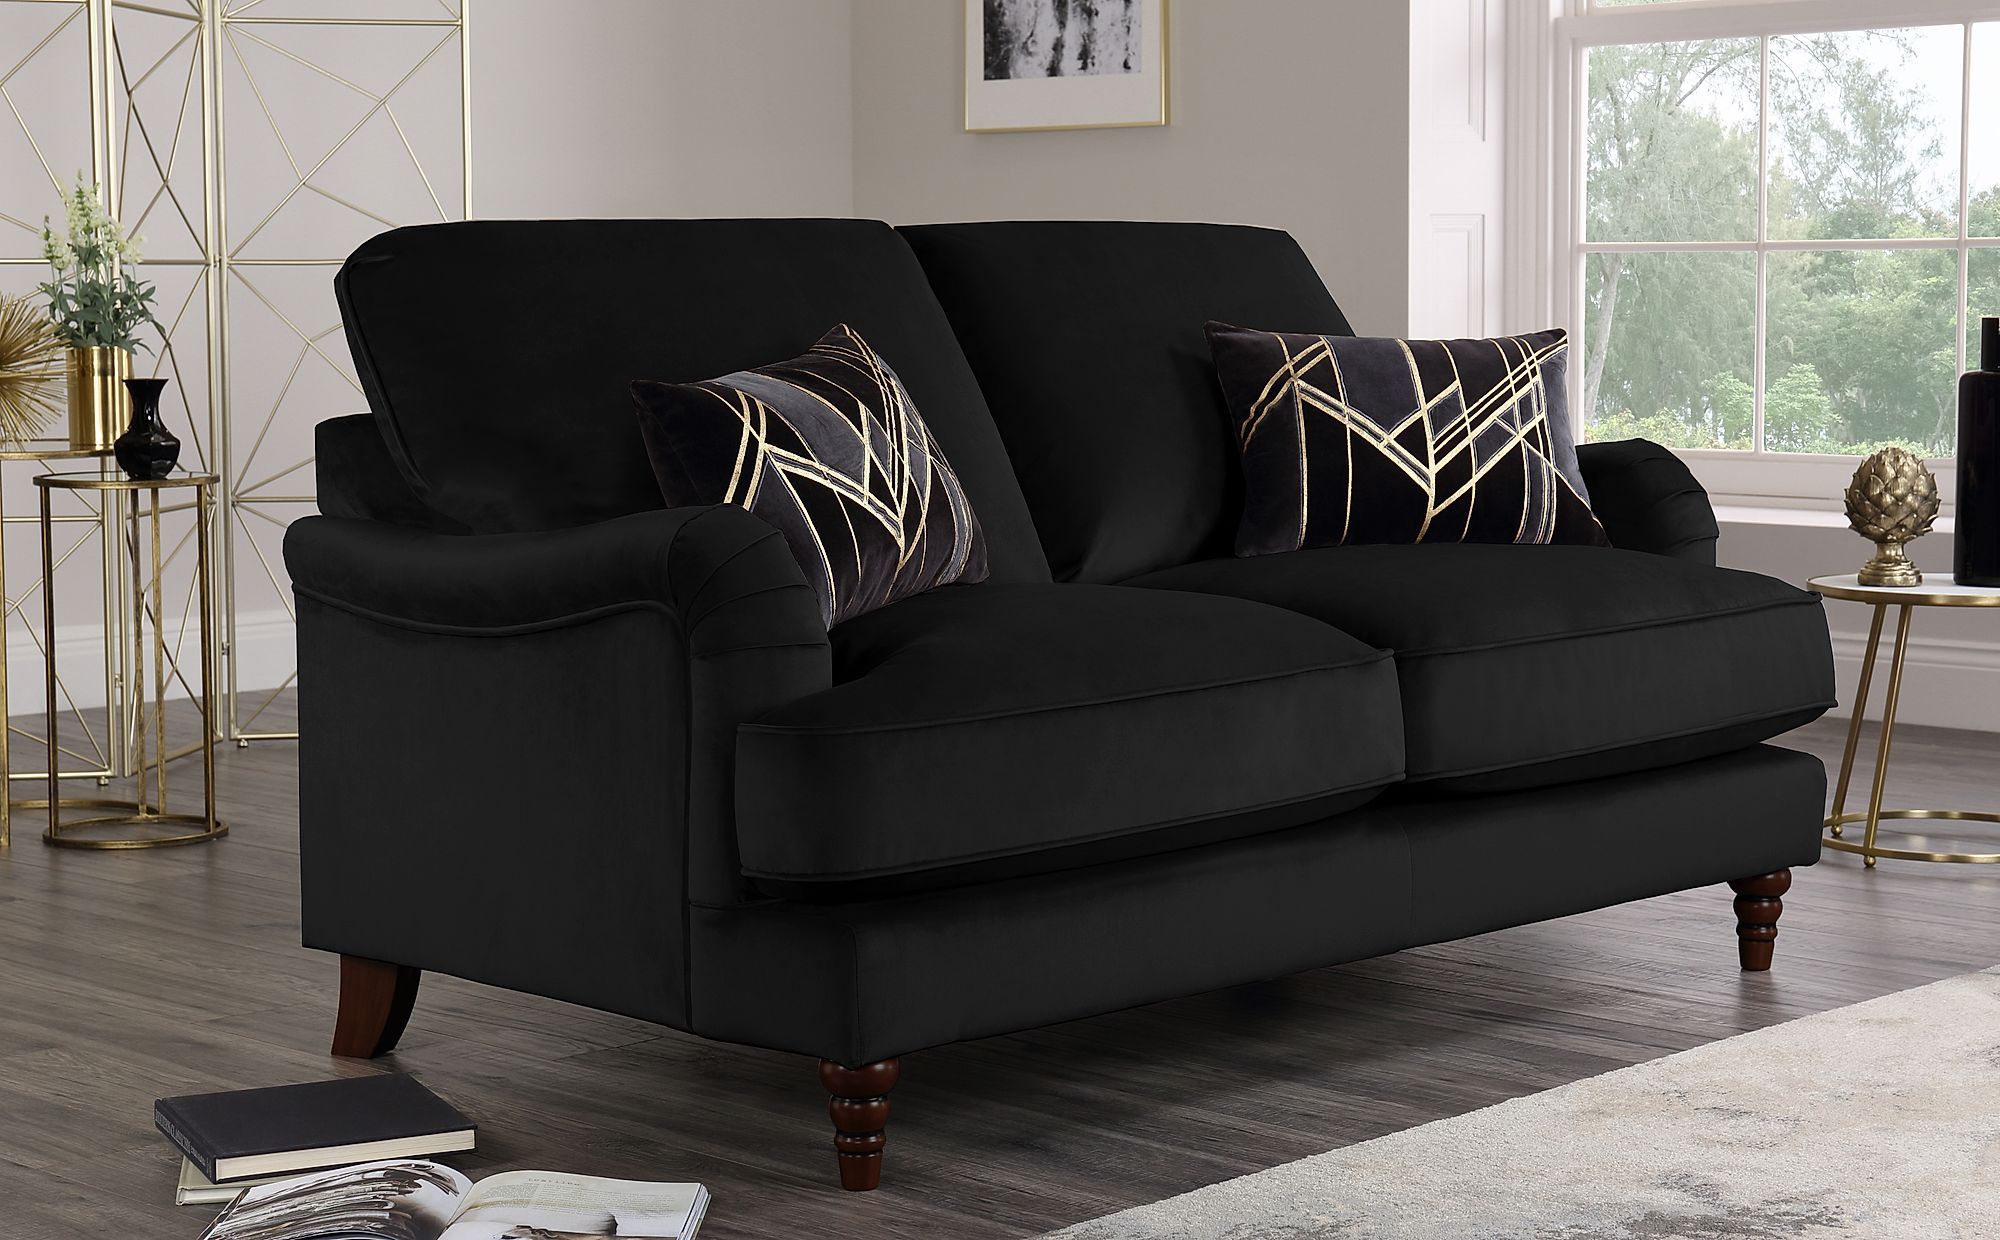 Charleston Black Velvet 2 Seater Sofa | Furniture Choice Throughout 2 Seater Sofas (View 3 of 15)